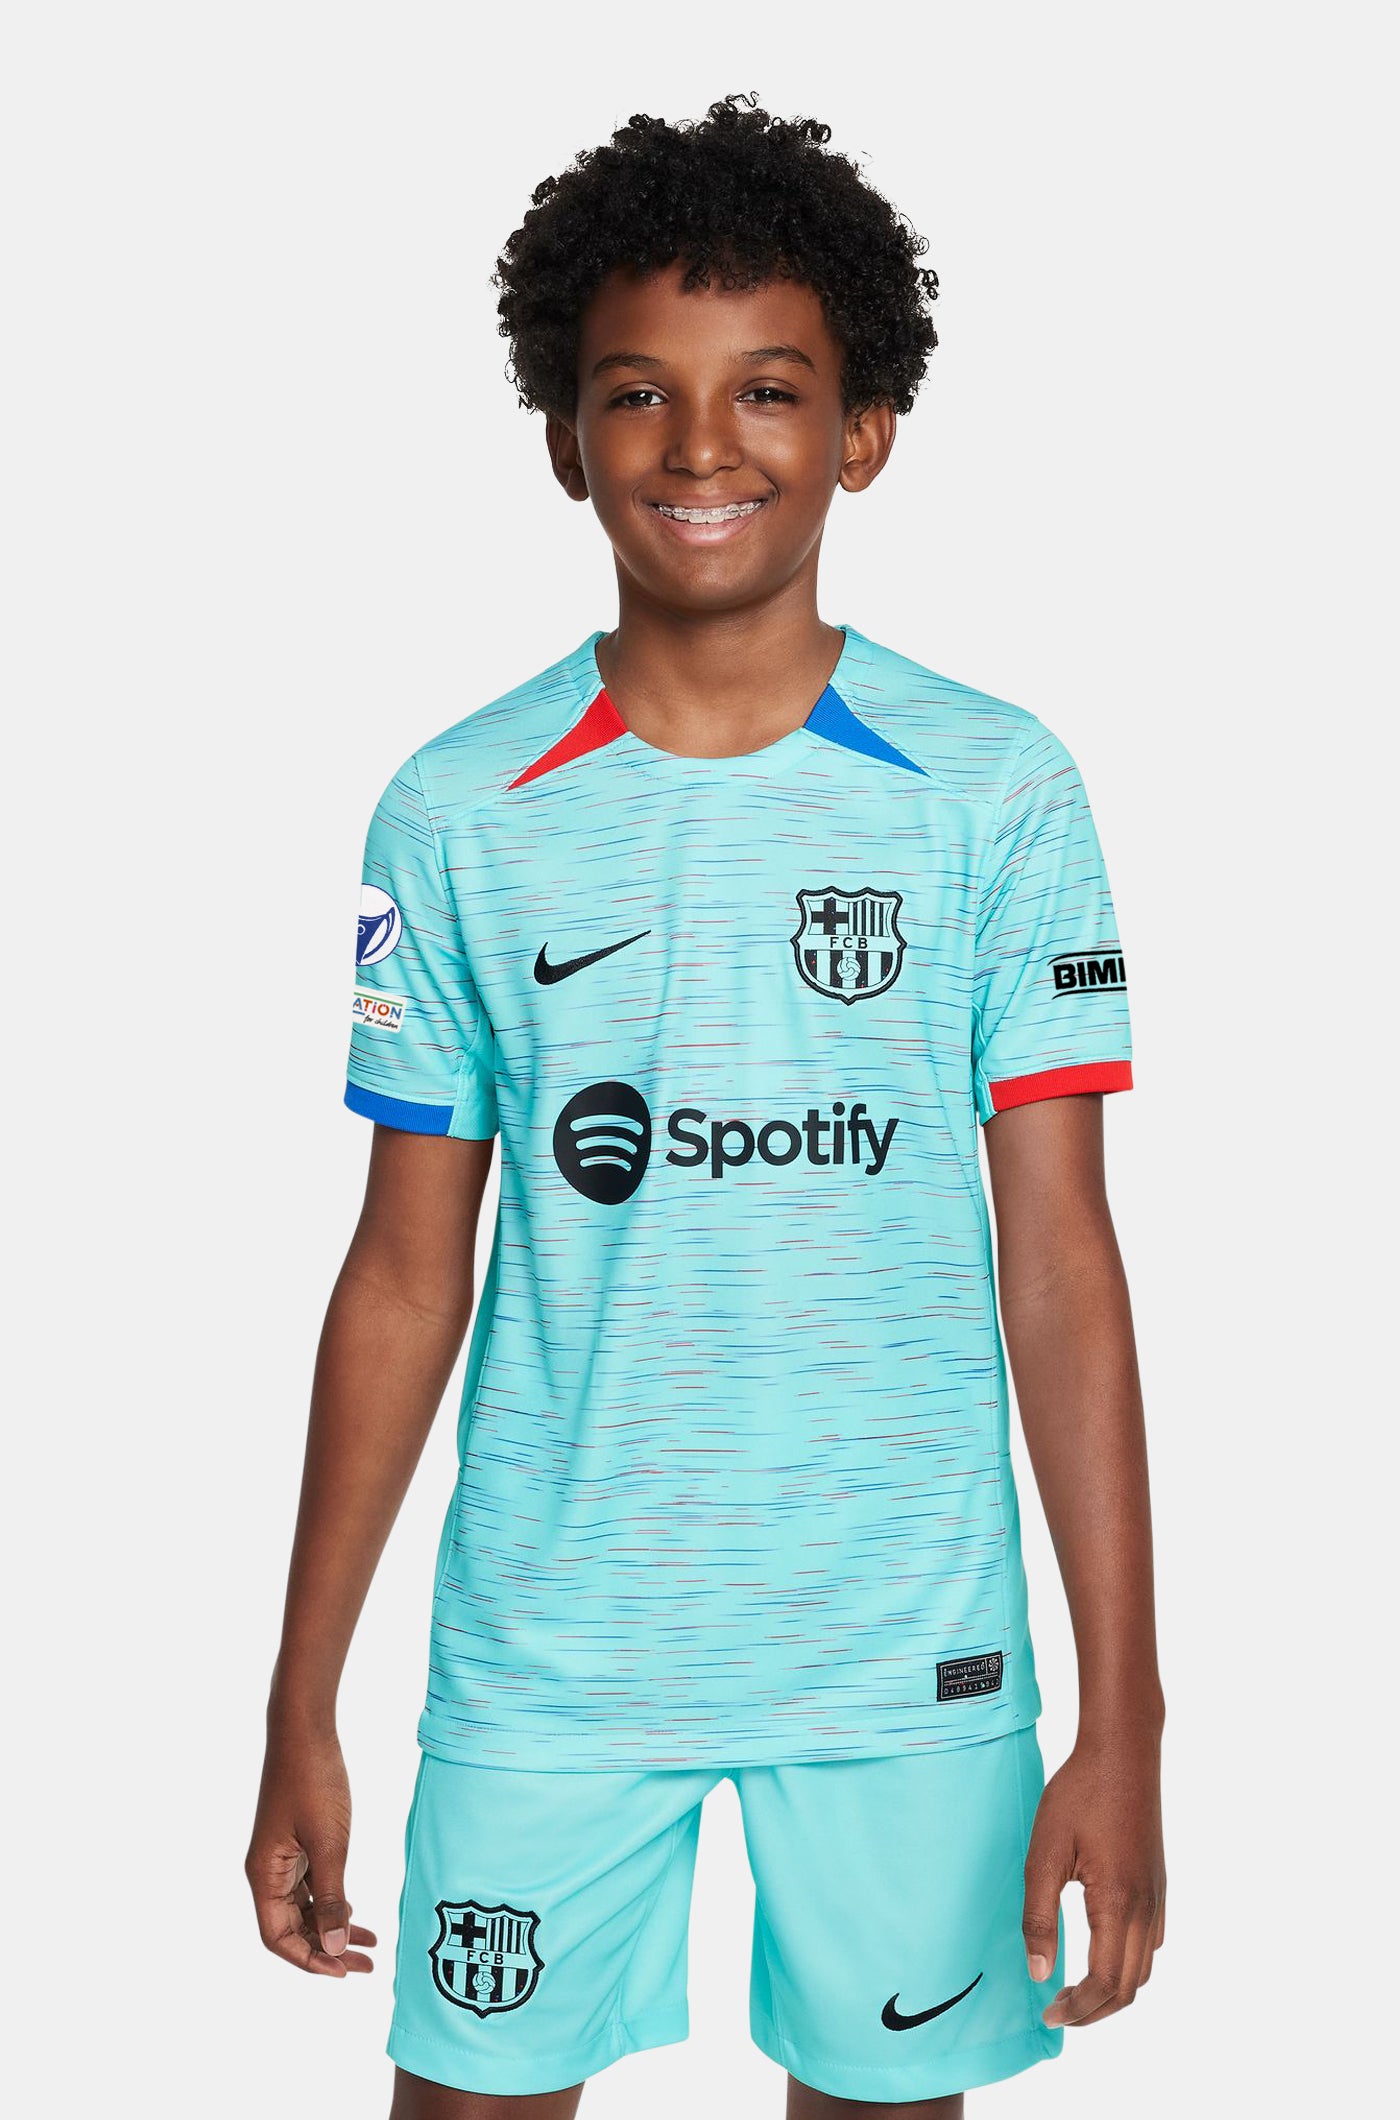 UWCL FC Barcelona third shirt 23/24 – Junior  - MARTA